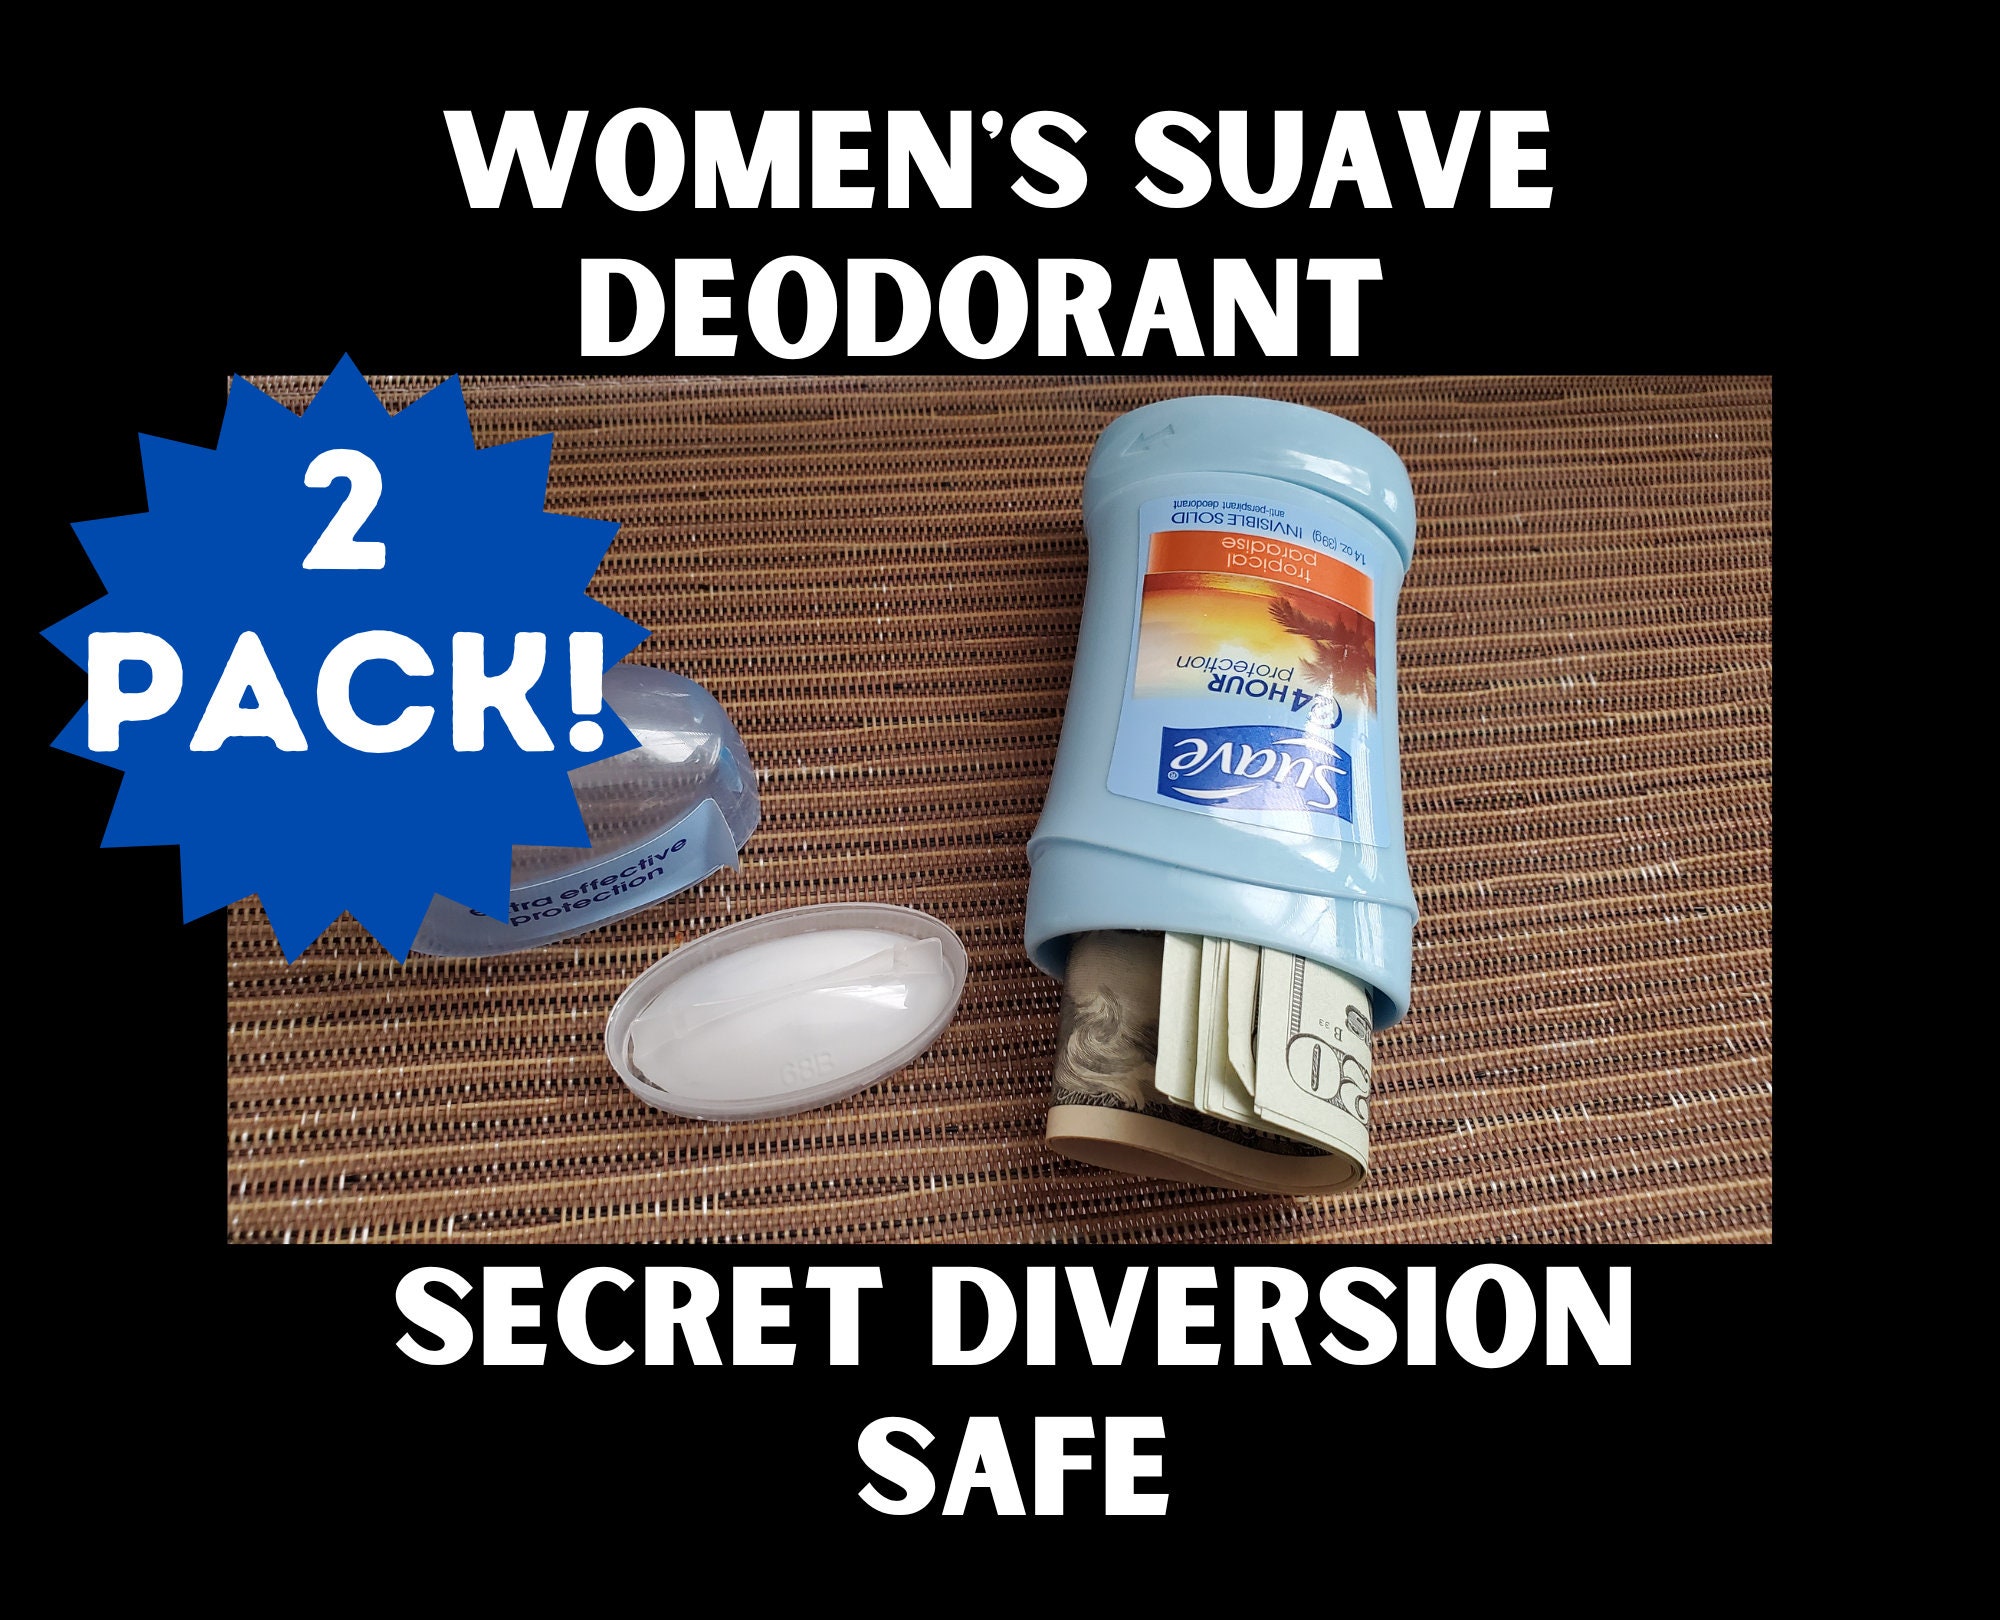 Aquanet Hairspray Diversion Safe - Department of Self Defense